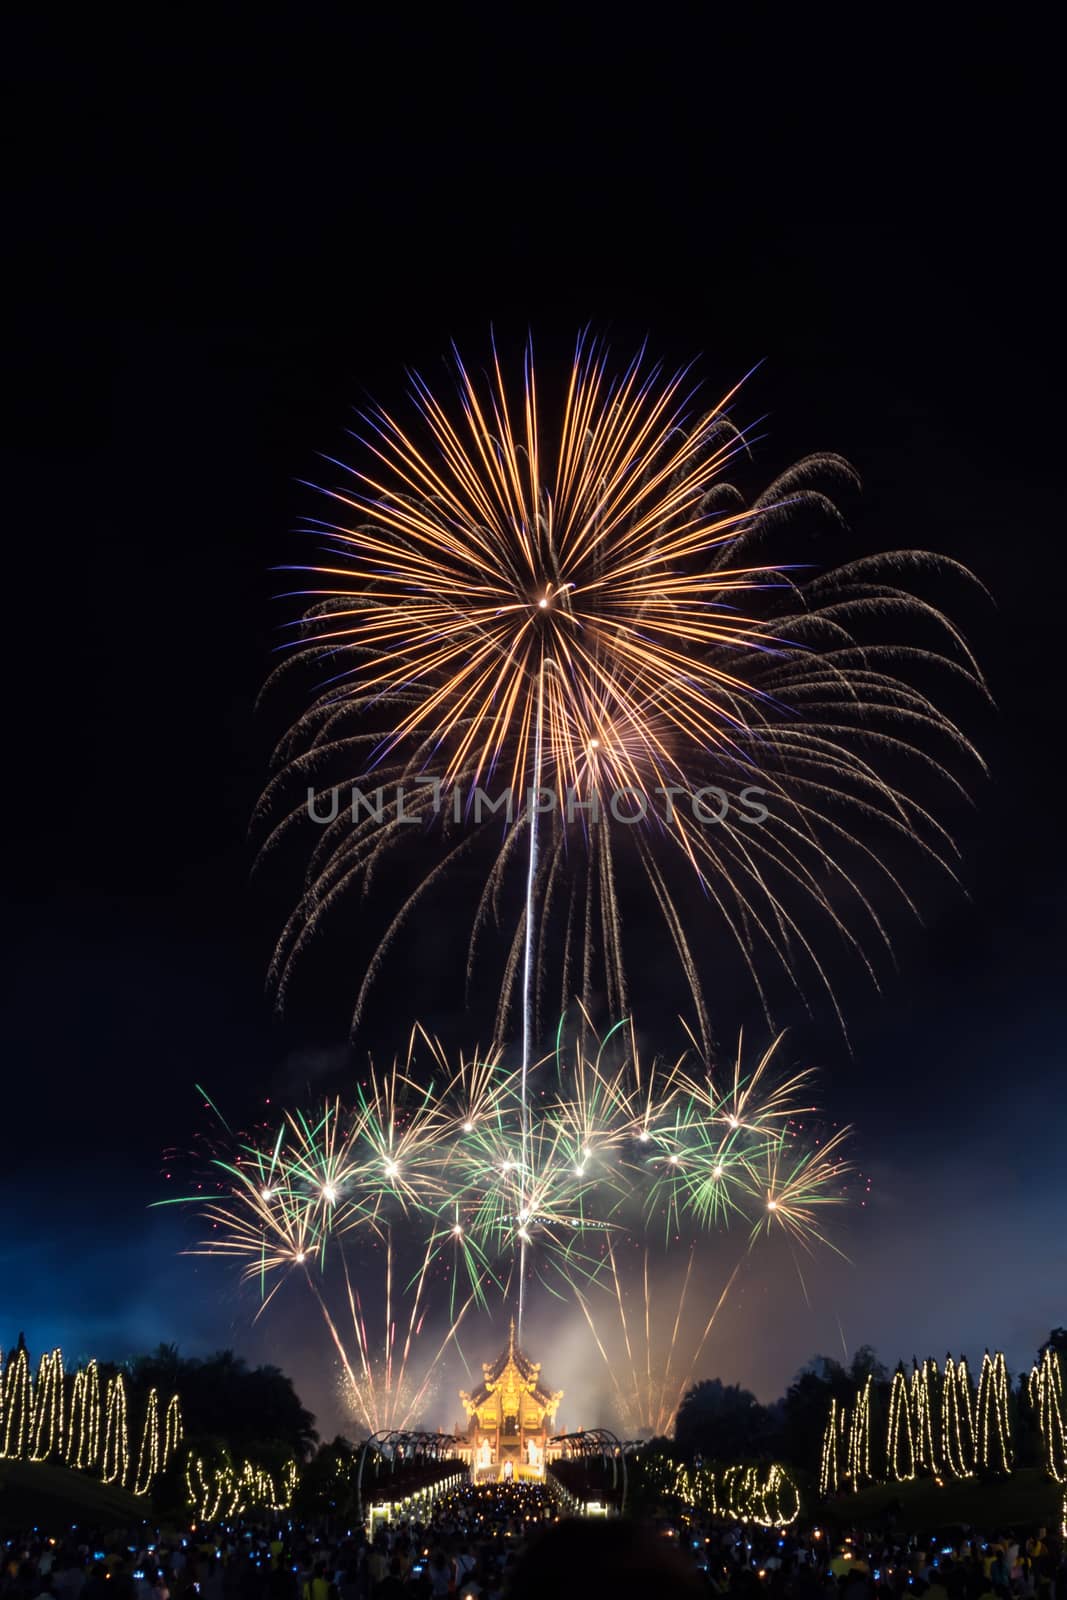 Beautiful display of colorful fireworks, Fireworks on night sky  by rakoptonLPN